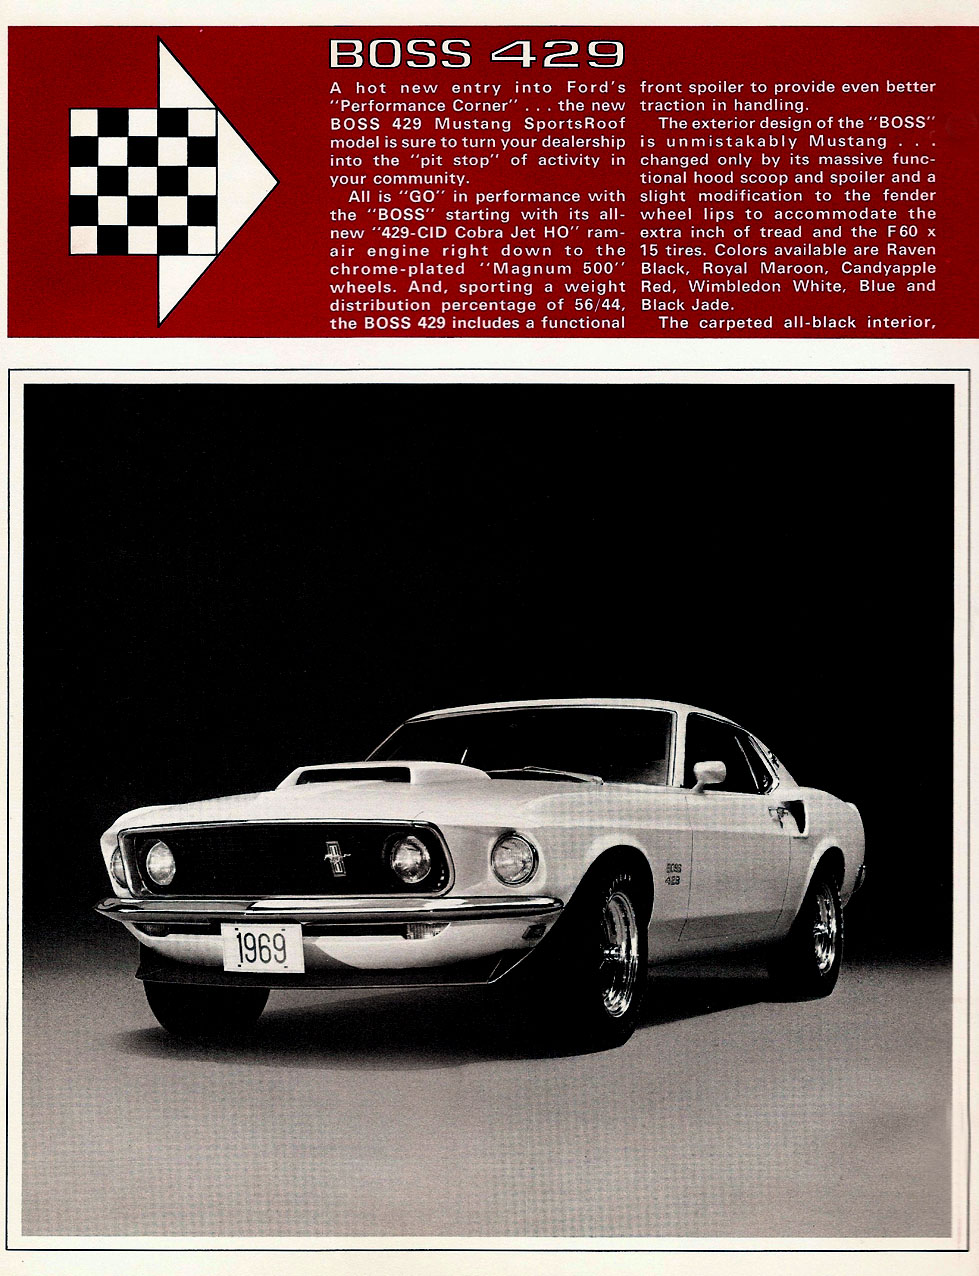 n_1969 Ford Mustang Boss 429-02.jpg